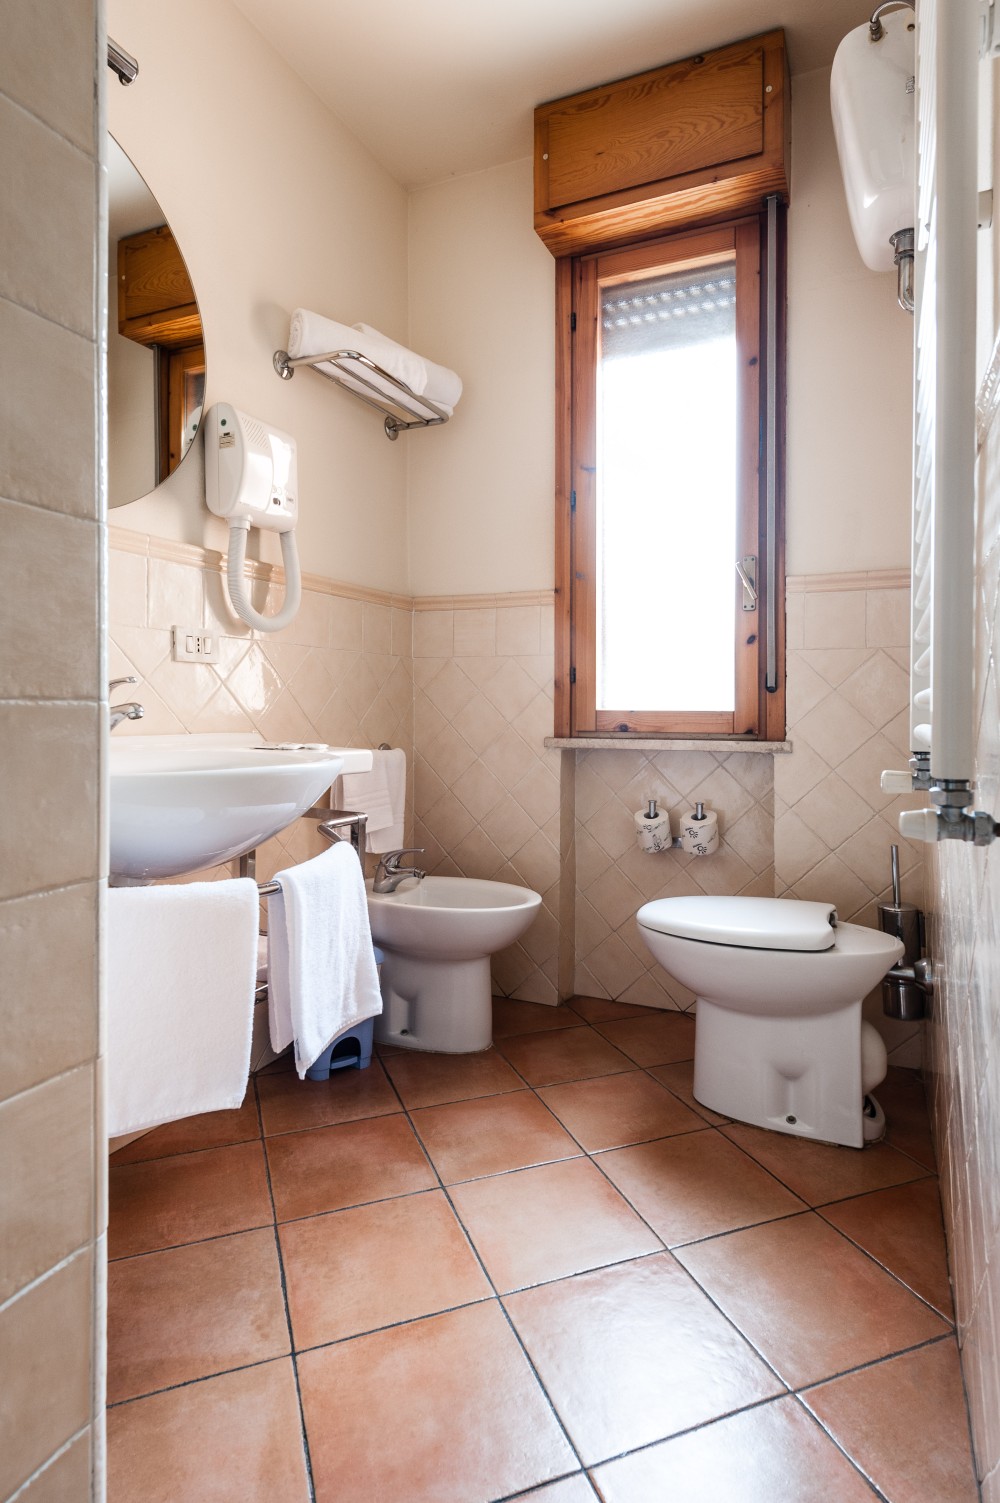 Suite|bagni suite Residence ISOLA VERDE, Cisanello Pisa